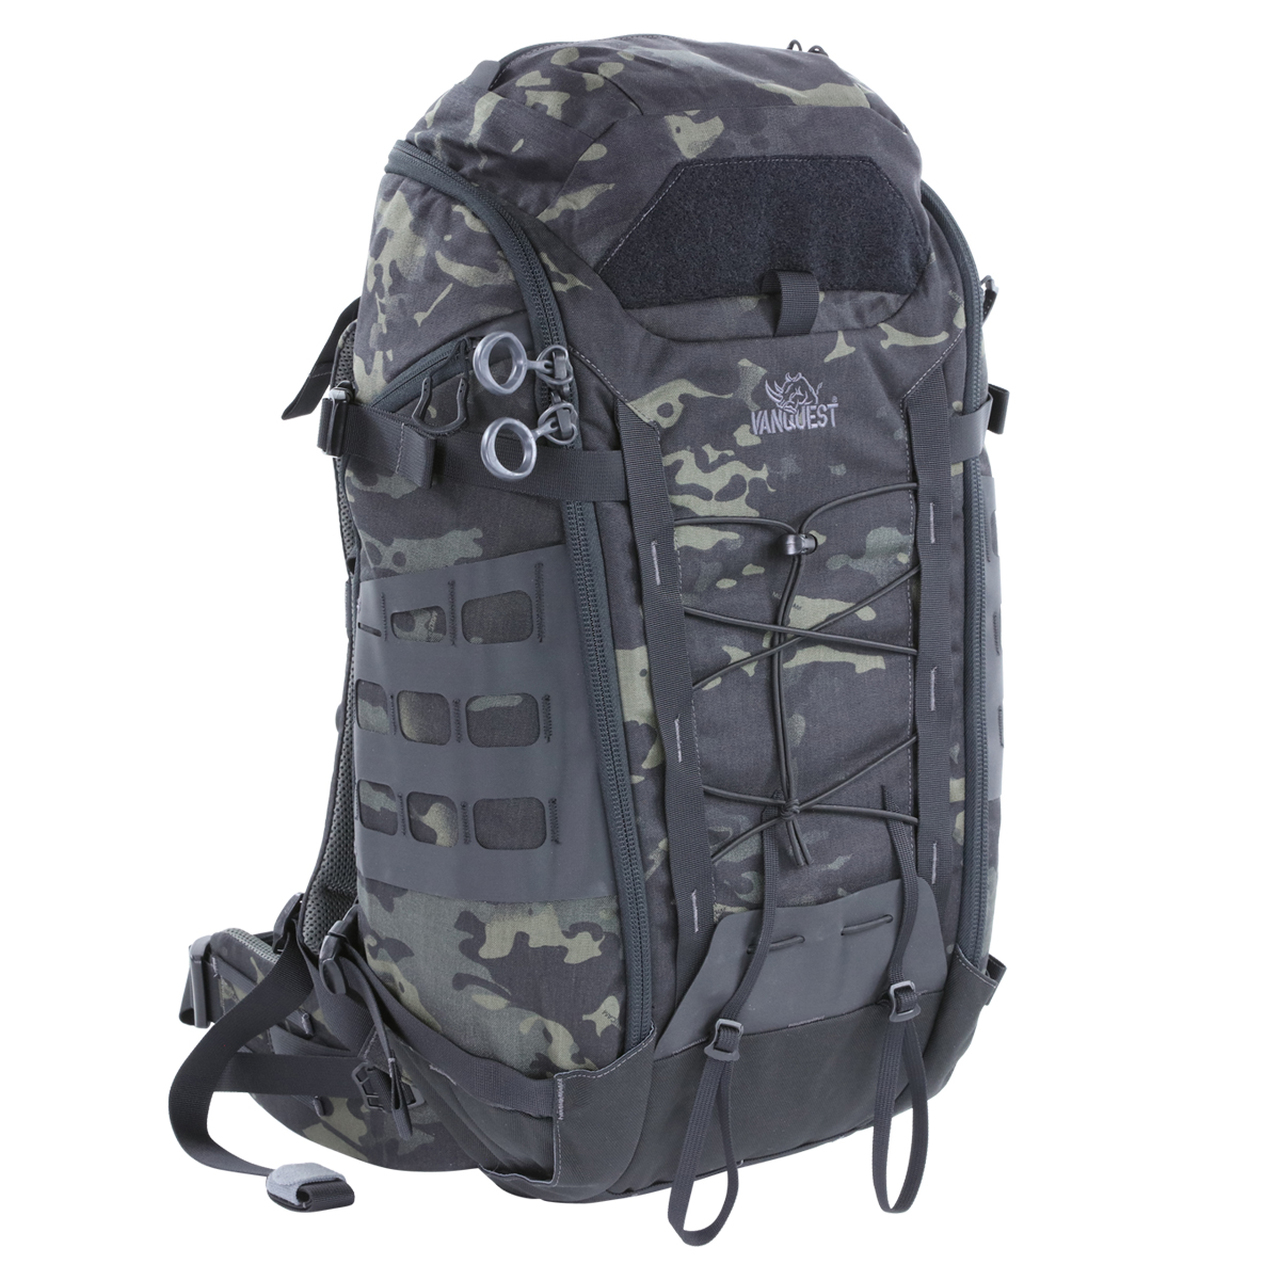 balo new balance 3d backpack